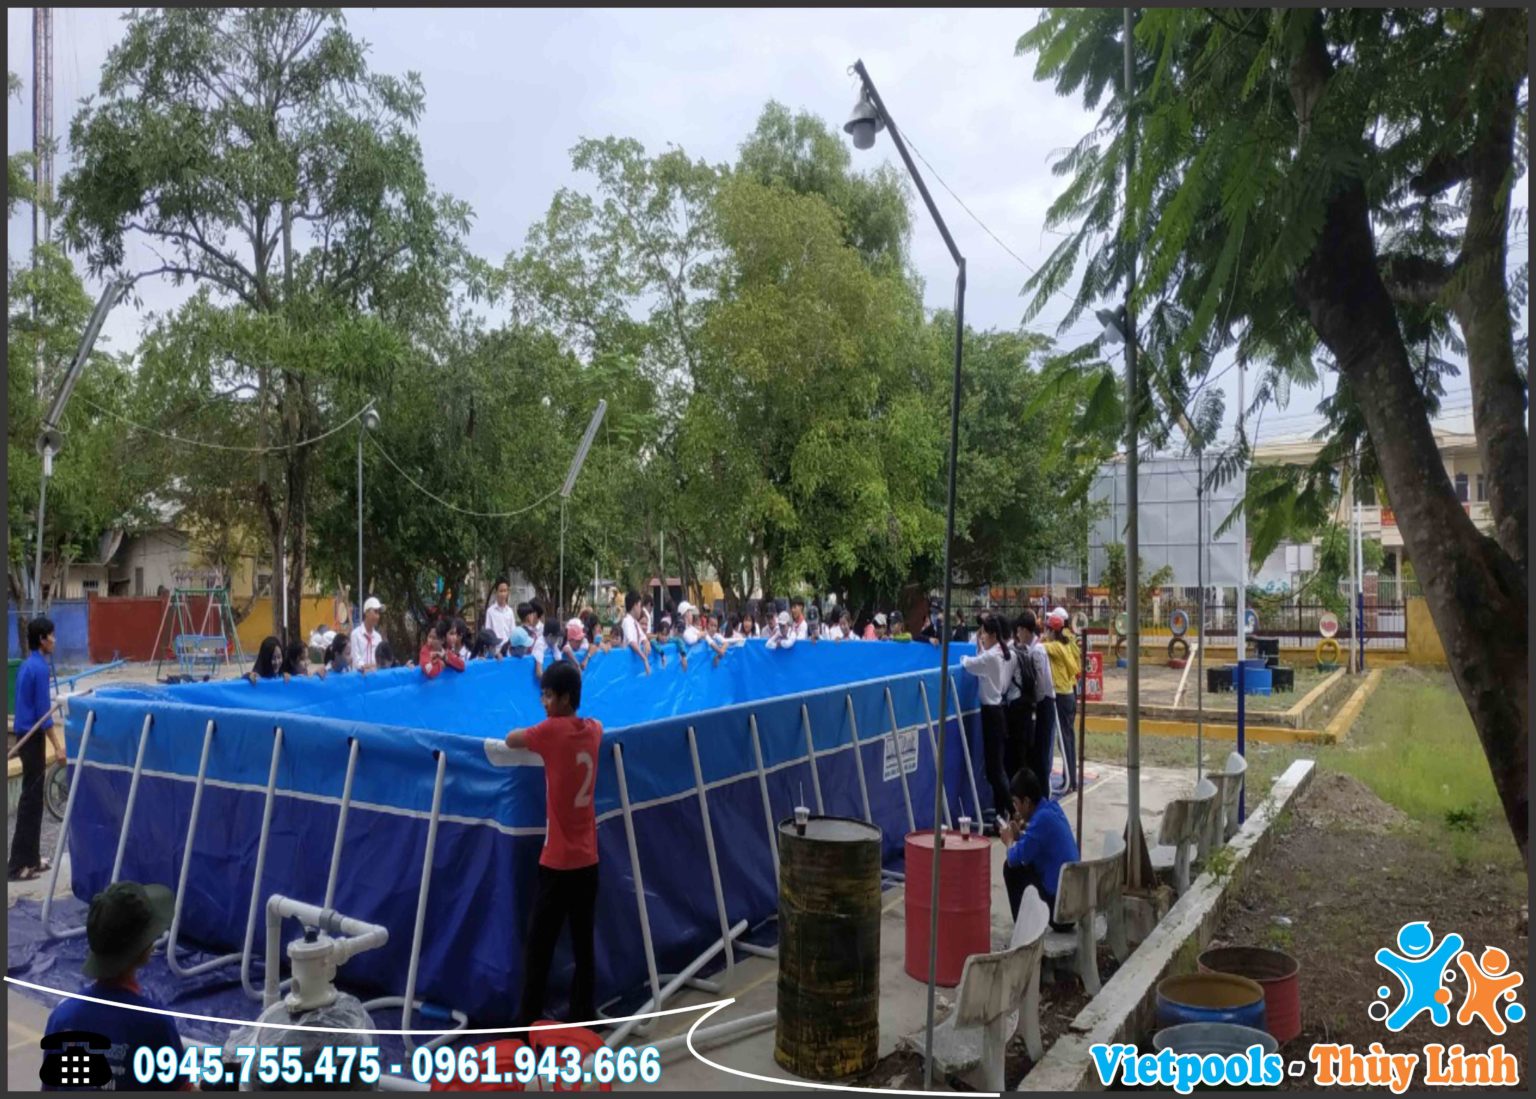 Bể Bơi Lắp Ghép Khung Kim Loại Vietpools KT 5.1mx18.6m - 2020 10